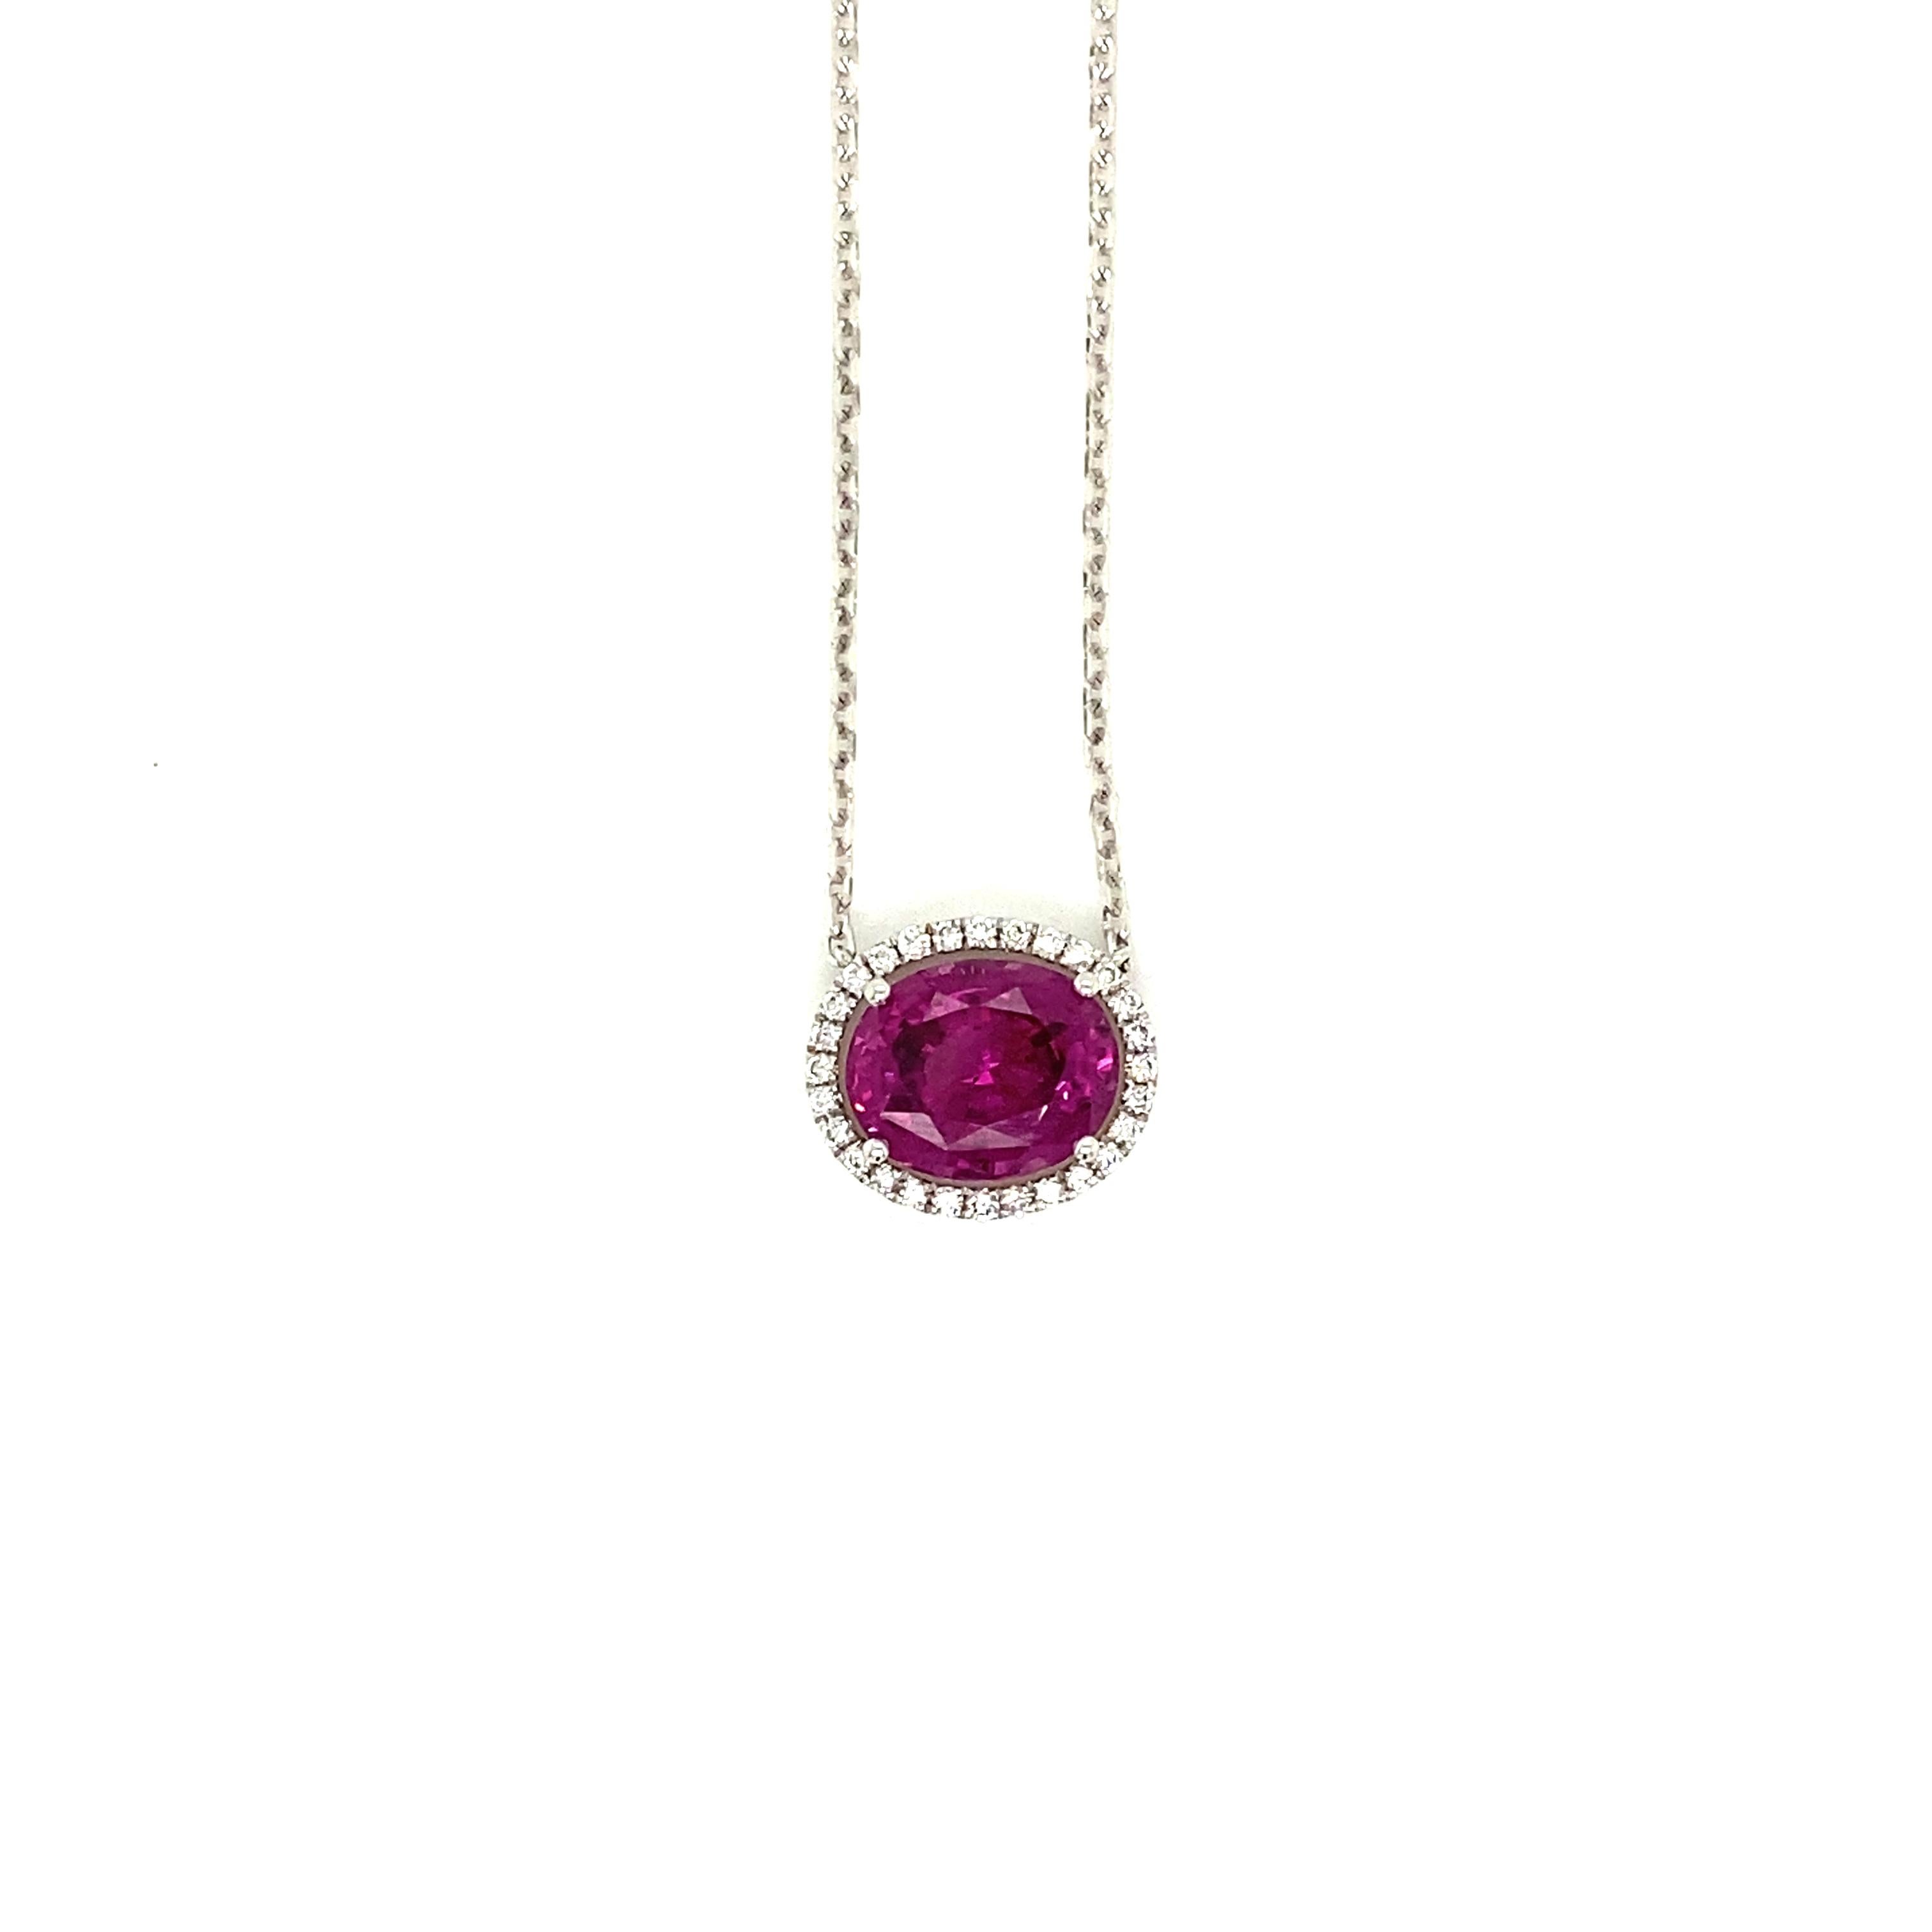 Contemporary 3.75Carat Pink-Purple Garnet and Diamond Pendant Necklace For Sale